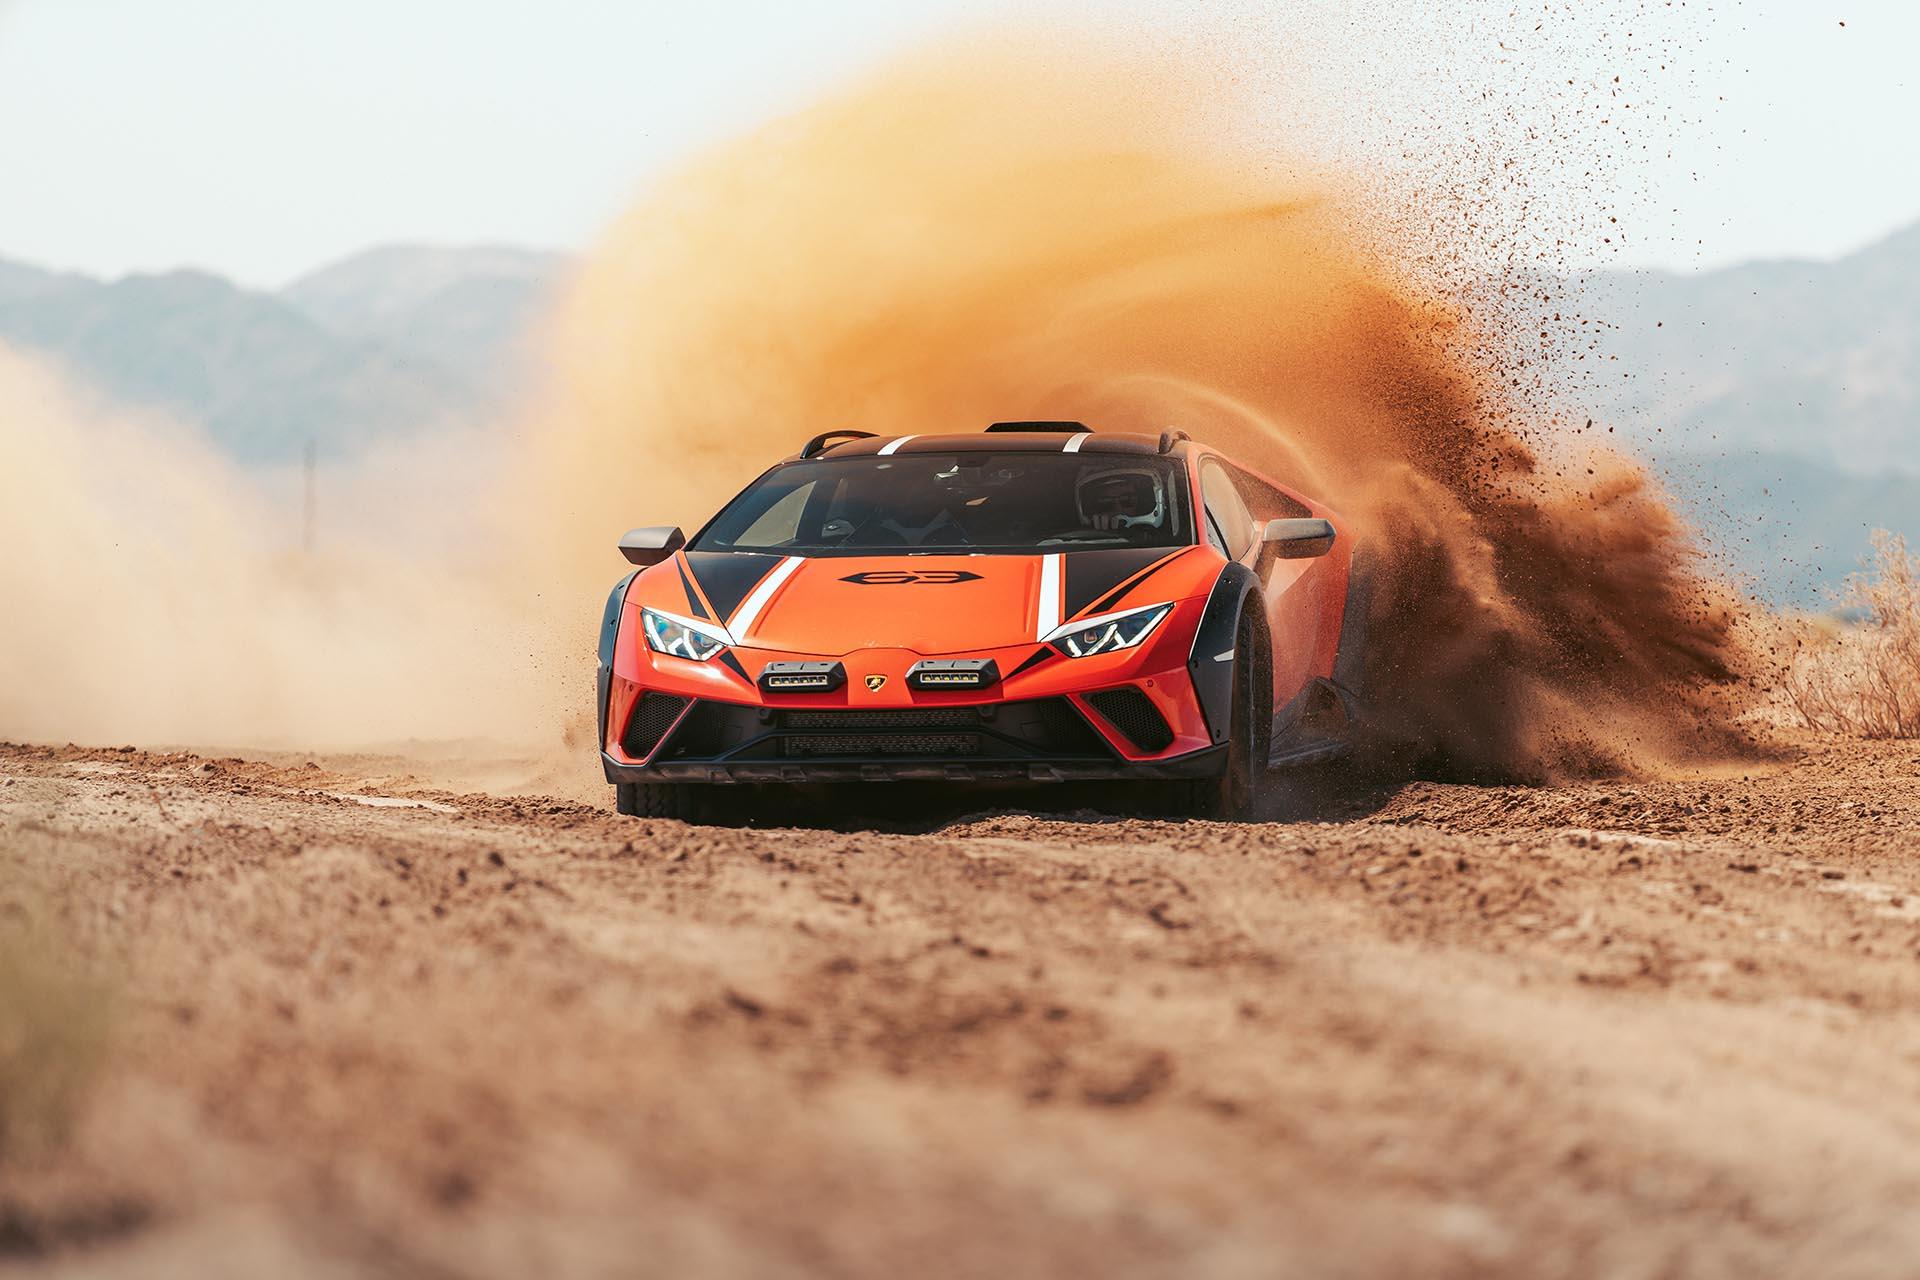 Lamborghini Huracán Sterrato in de woestijn (met stofwolken)